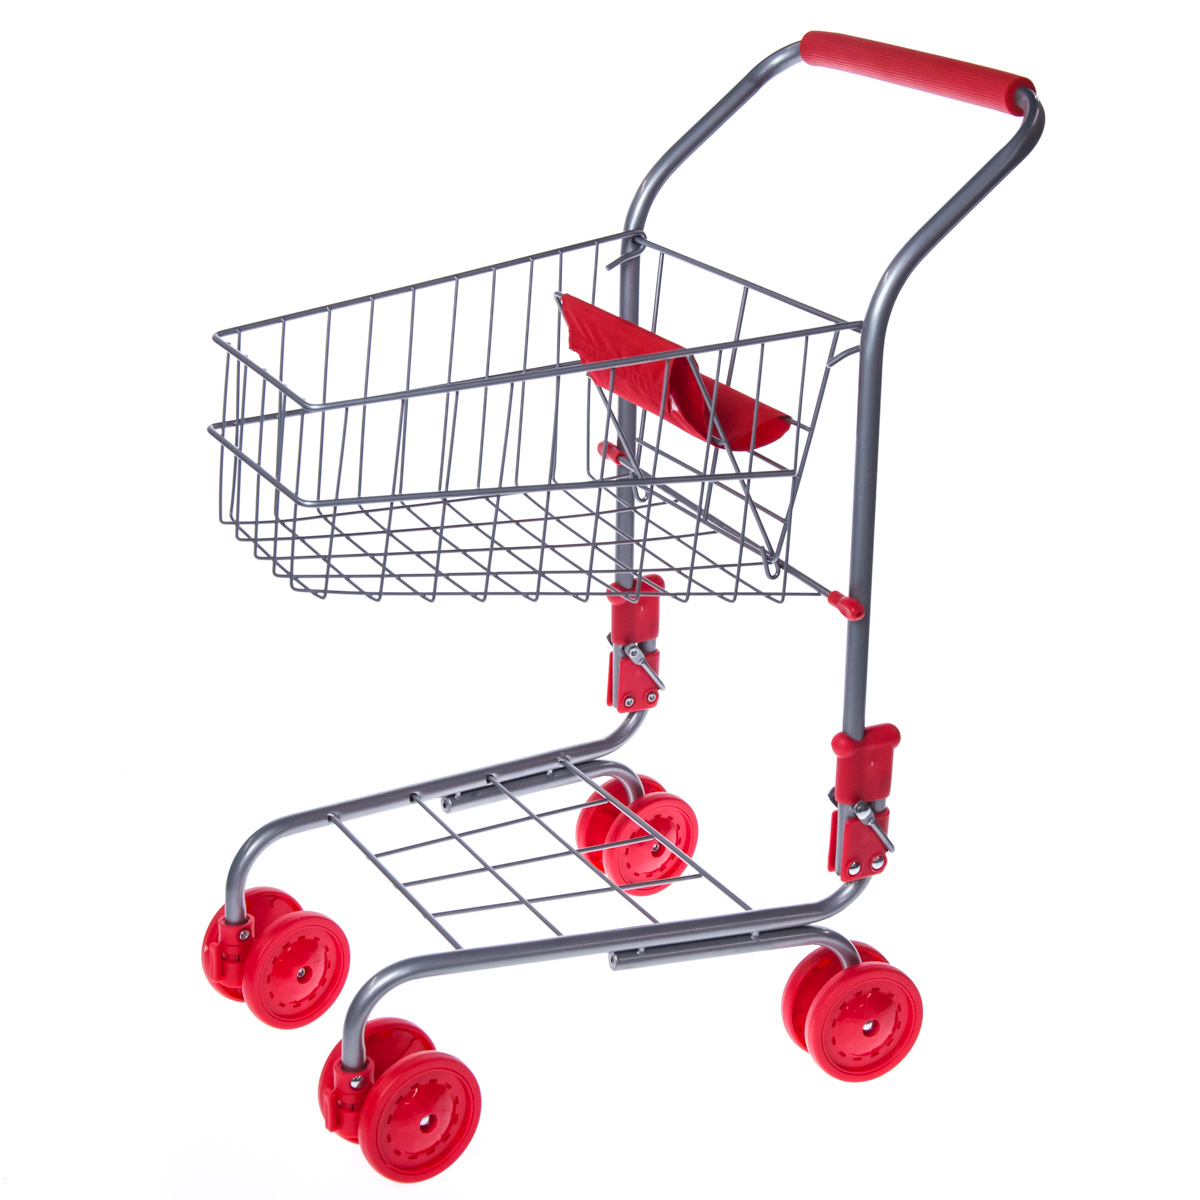 childs shopping cart